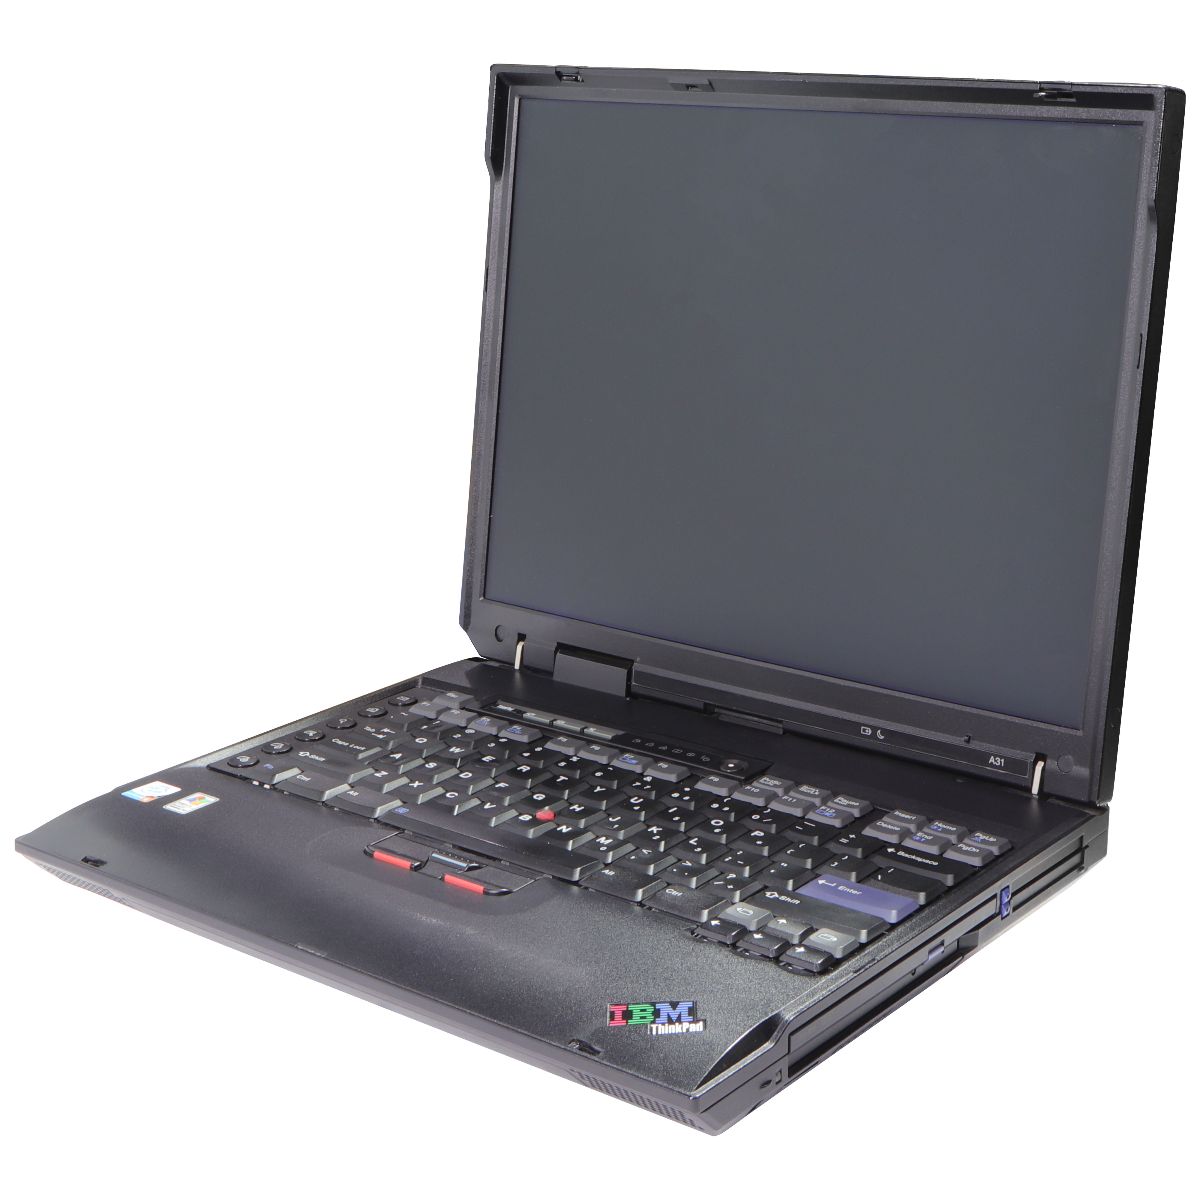 IBM ThinkPad A31 (14.1-in) Laptop (2652-PBU) Pentium 4/20GB HDD/512MB/XP Pro Laptops - PC Laptops & Netbooks IBM    - Simple Cell Bulk Wholesale Pricing - USA Seller